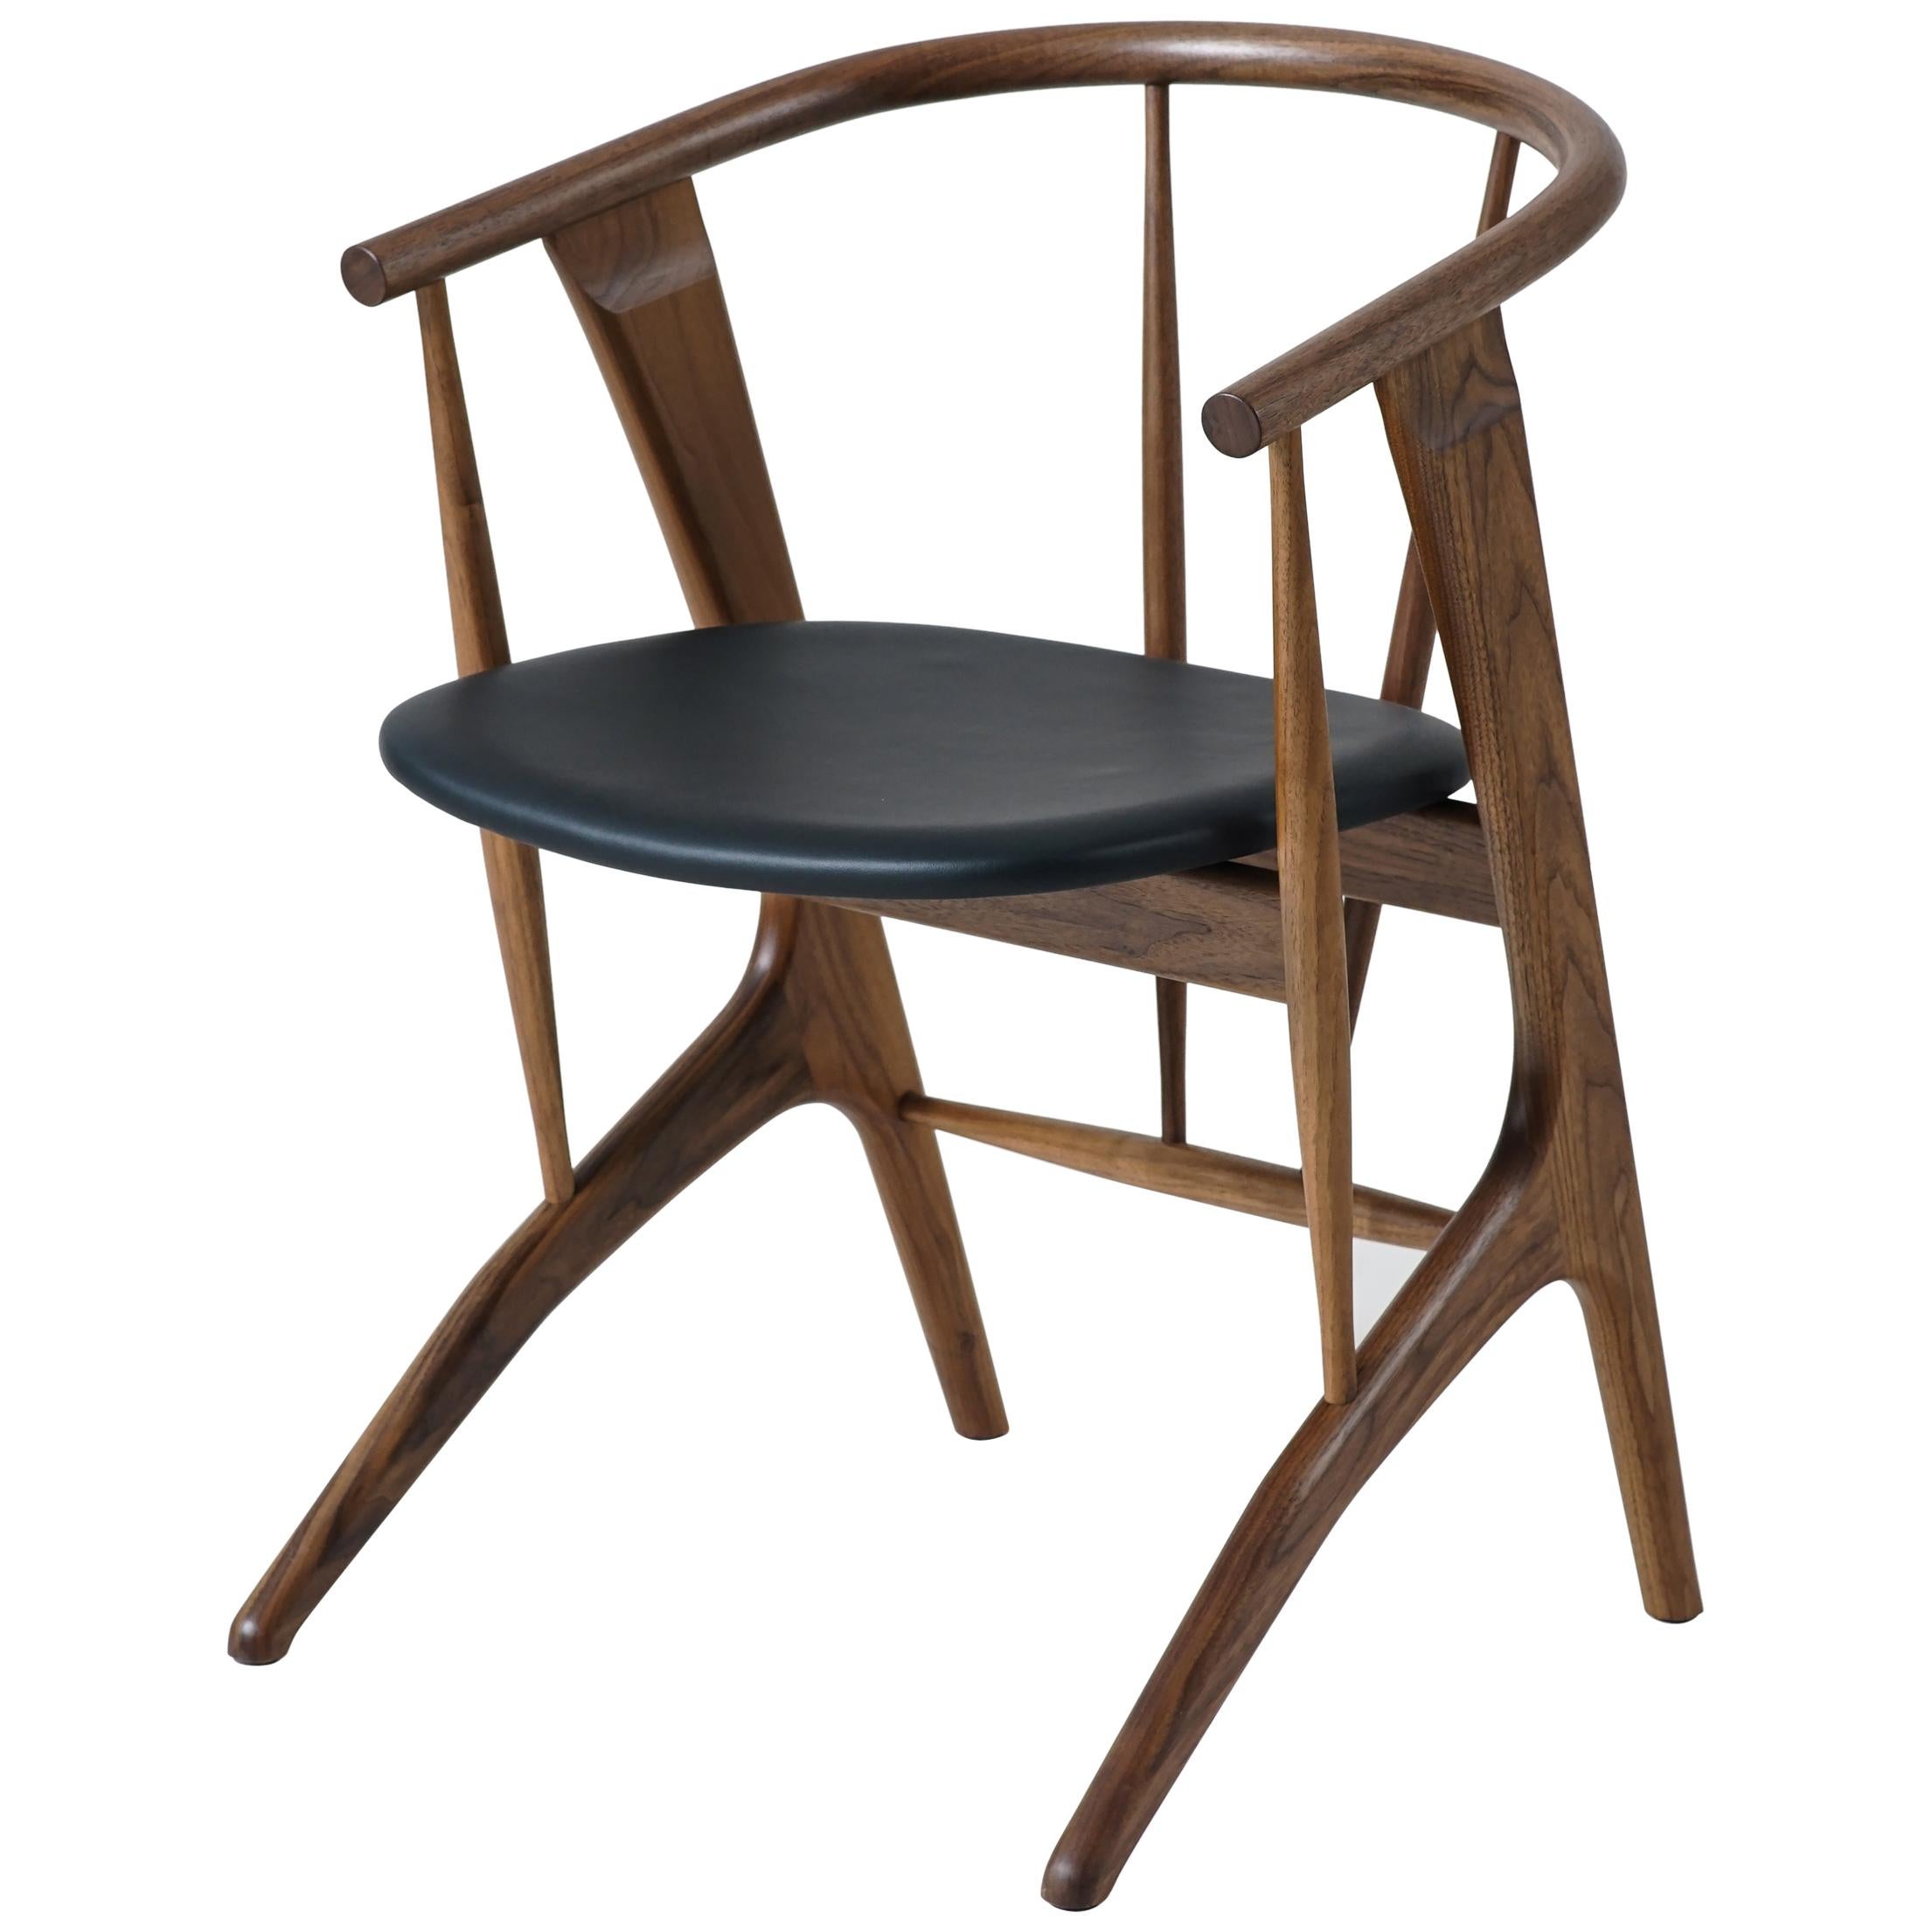 Phloem Studio Zoe Chair, Modern Walnut Dining Chair with Leather Upholstery